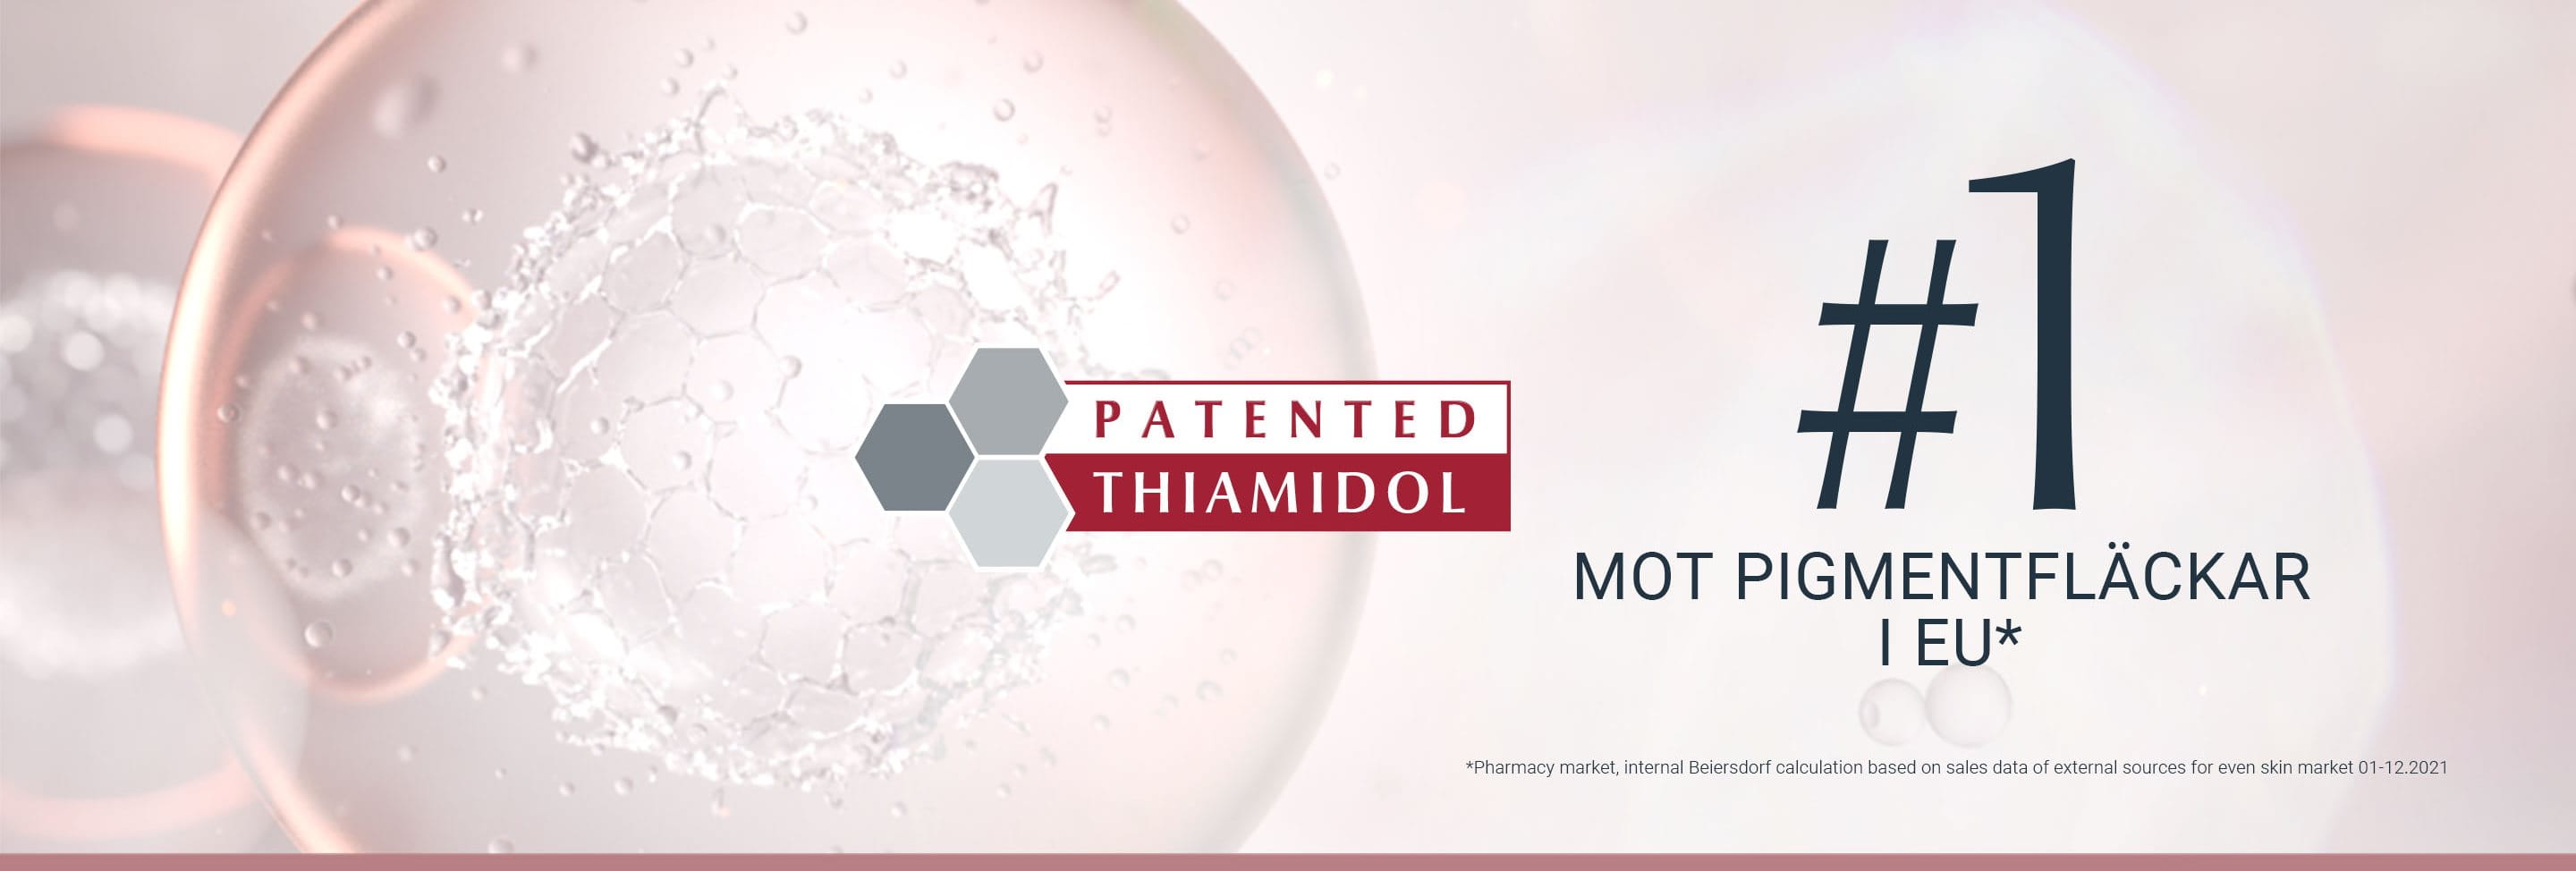 Thiamidol – Den främsta ingrediensen mot hyperpigmentering